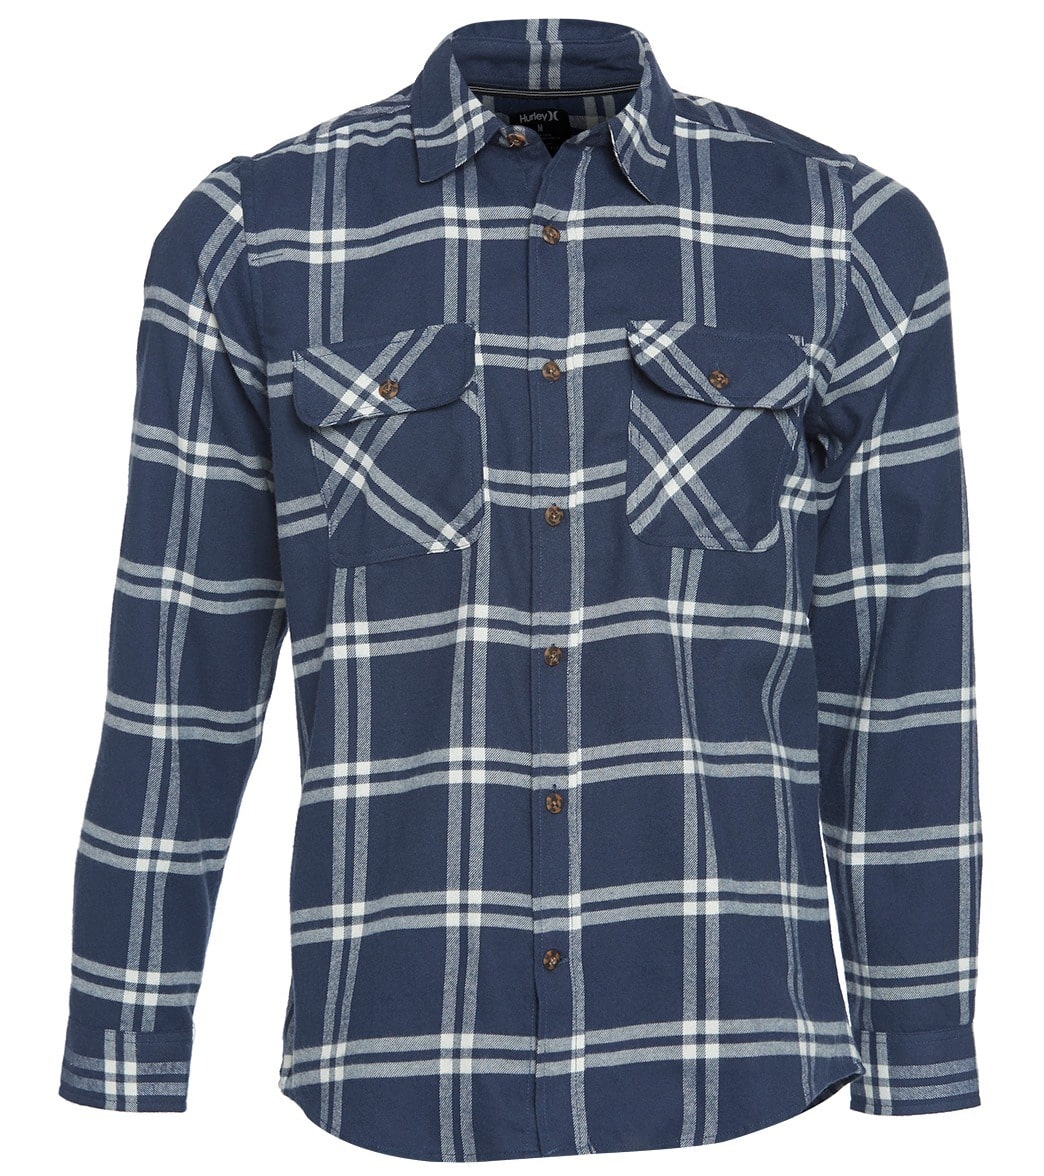 Hurley Dri Fit Salinger Long Sleeve Shirt - Obsidian Medium Cotton/Polyester - Swimoutlet.com